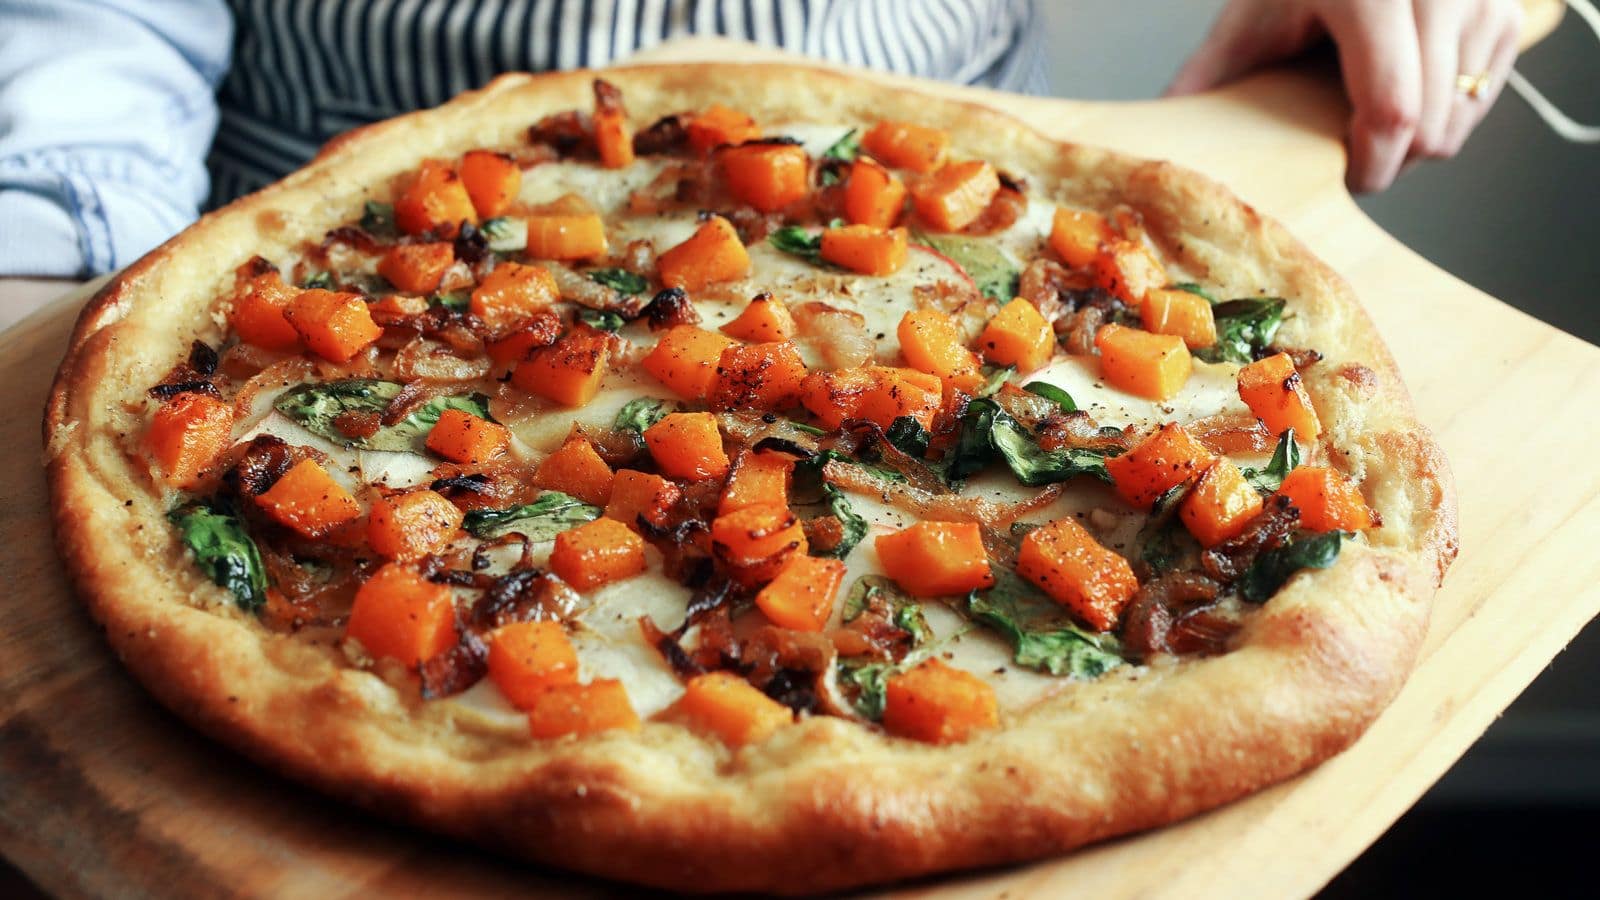 Recipe: Cook this delicious squash and apple pizza